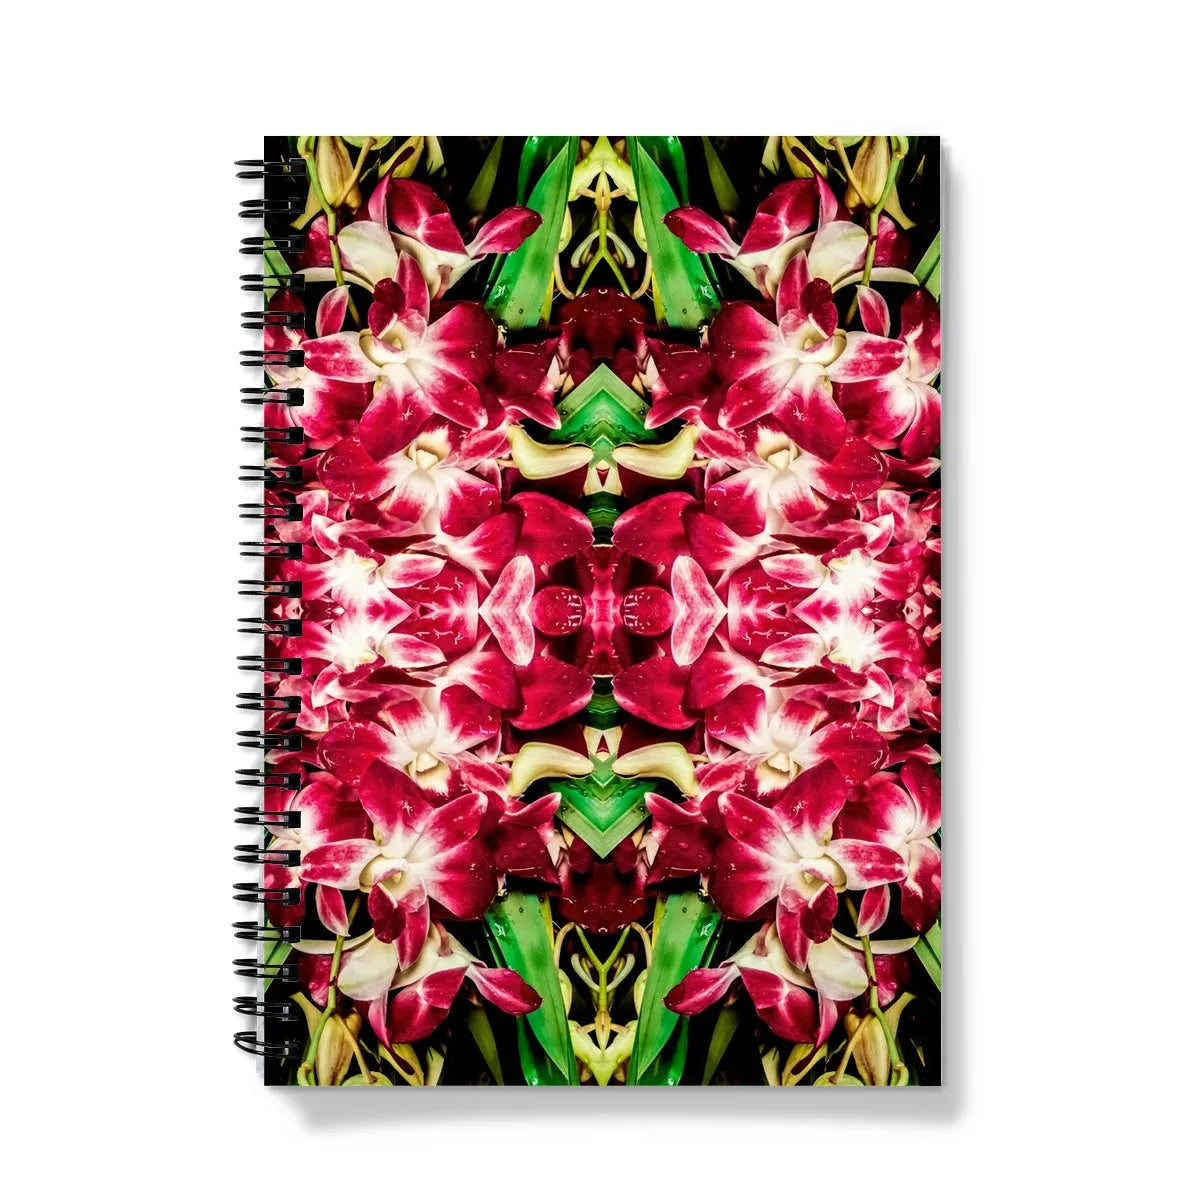 Ruby Reds Notebook - A5 - Graph Paper - Notebooks & Notepads - Aesthetic Art